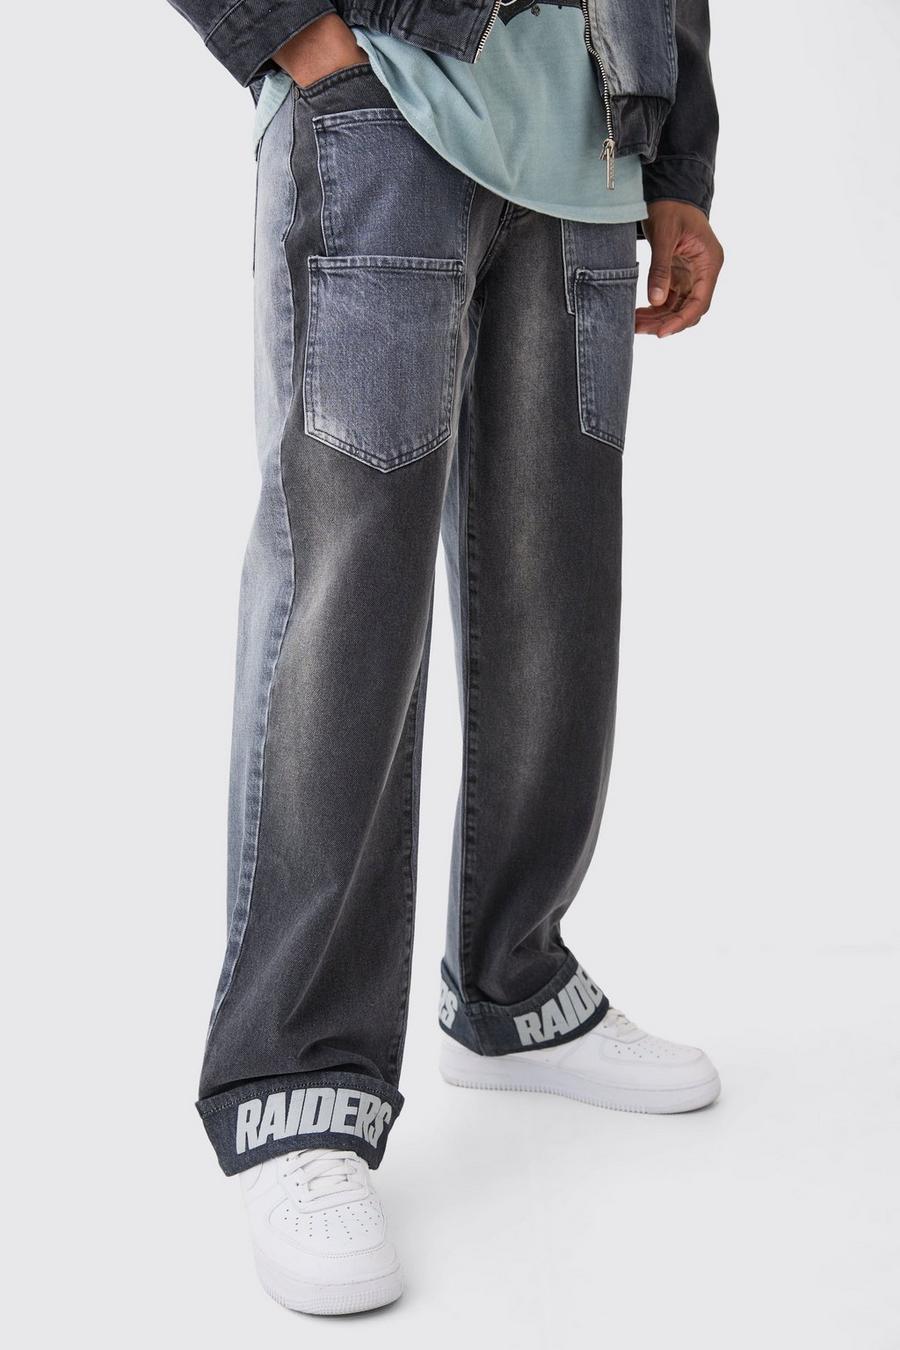 Charcoal Nfl Raiders Baggy Rigid Multi Pocket Spliced Jeans